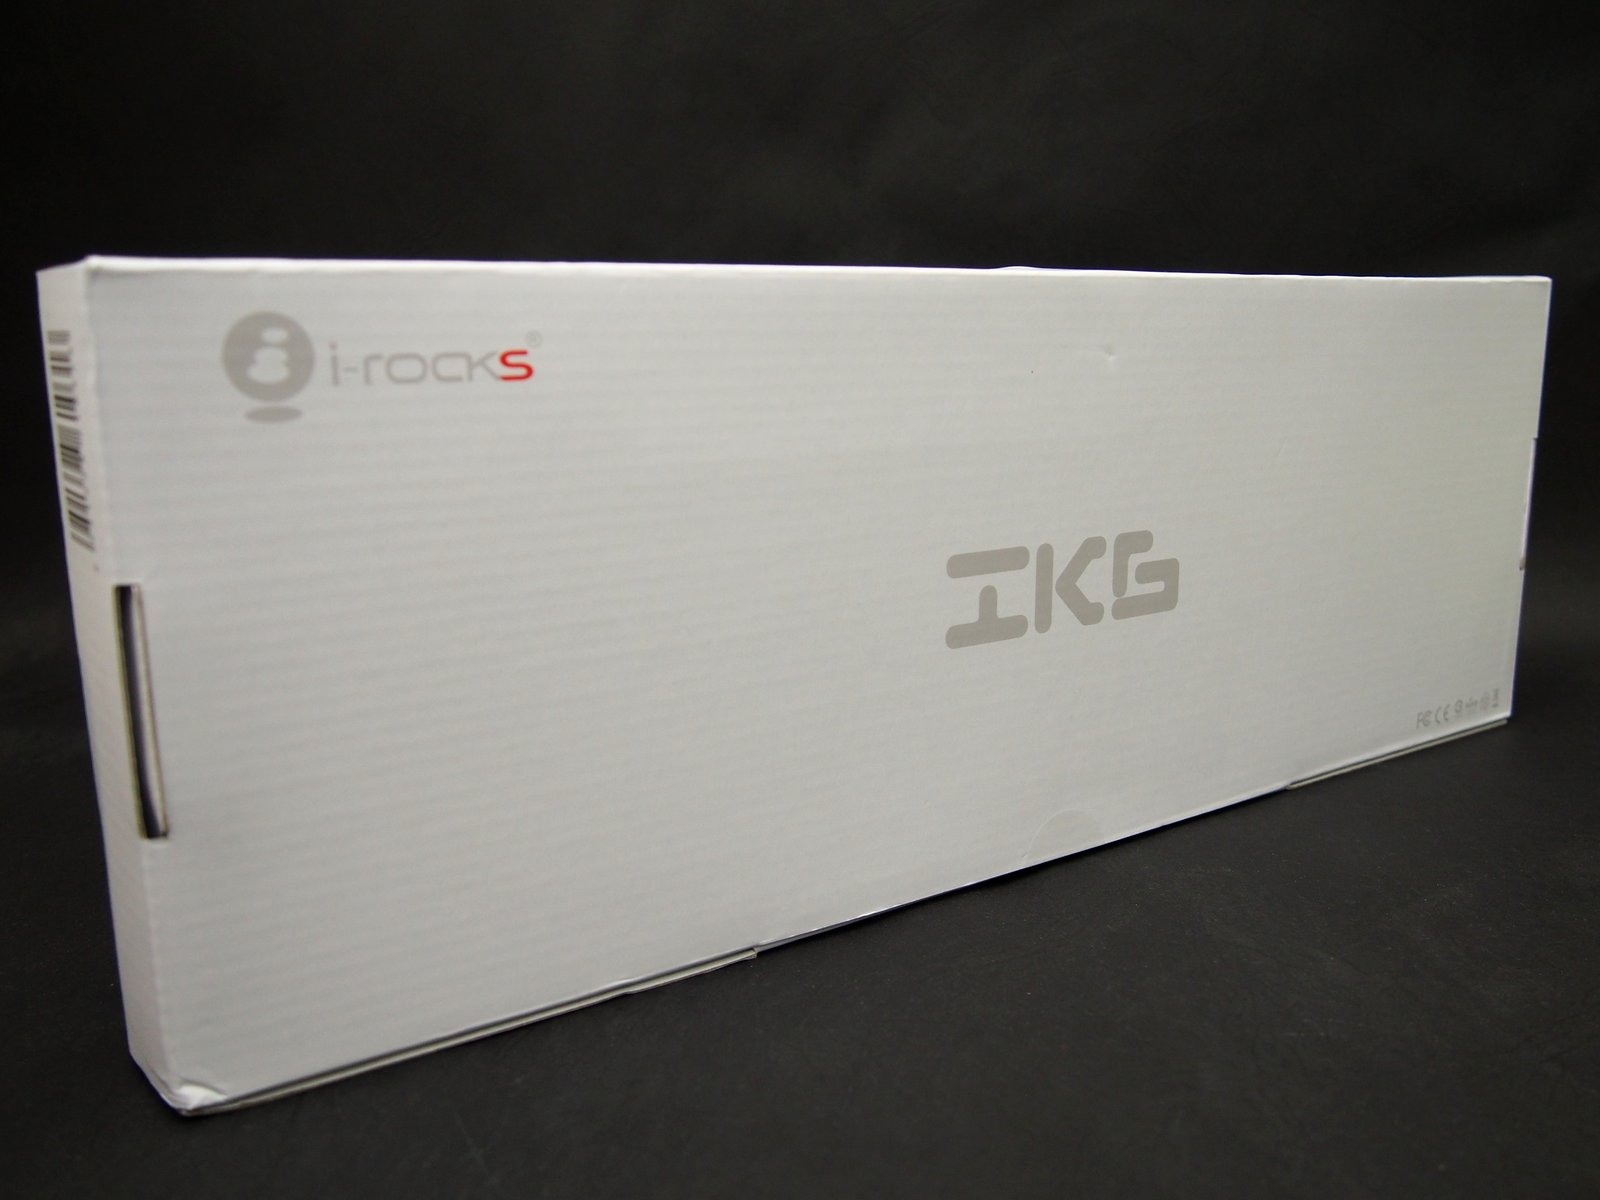 [XF] 令人愛不釋手的水晶鍵盤 i-rocks IK6